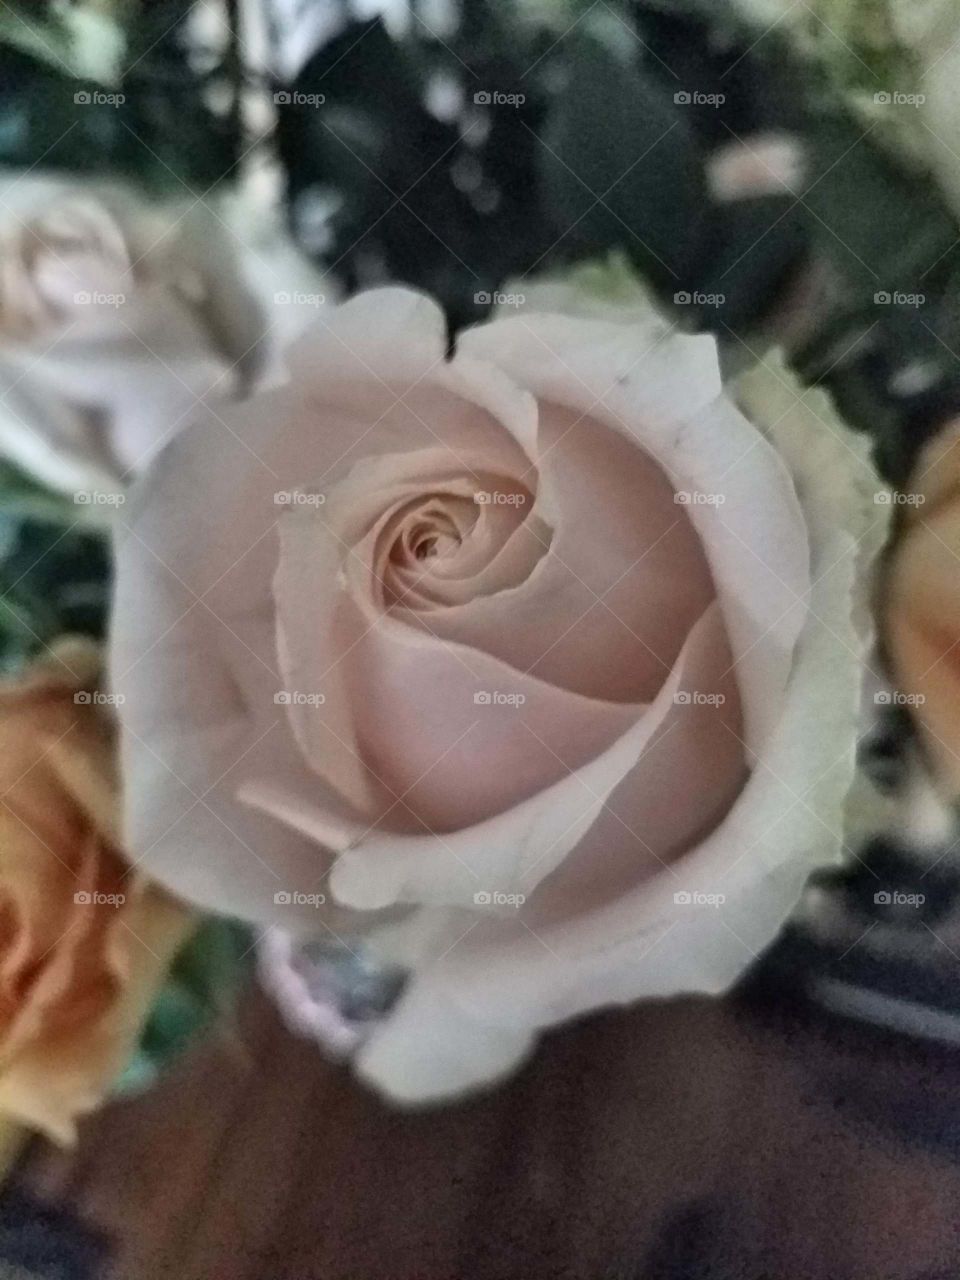 pretty roses.